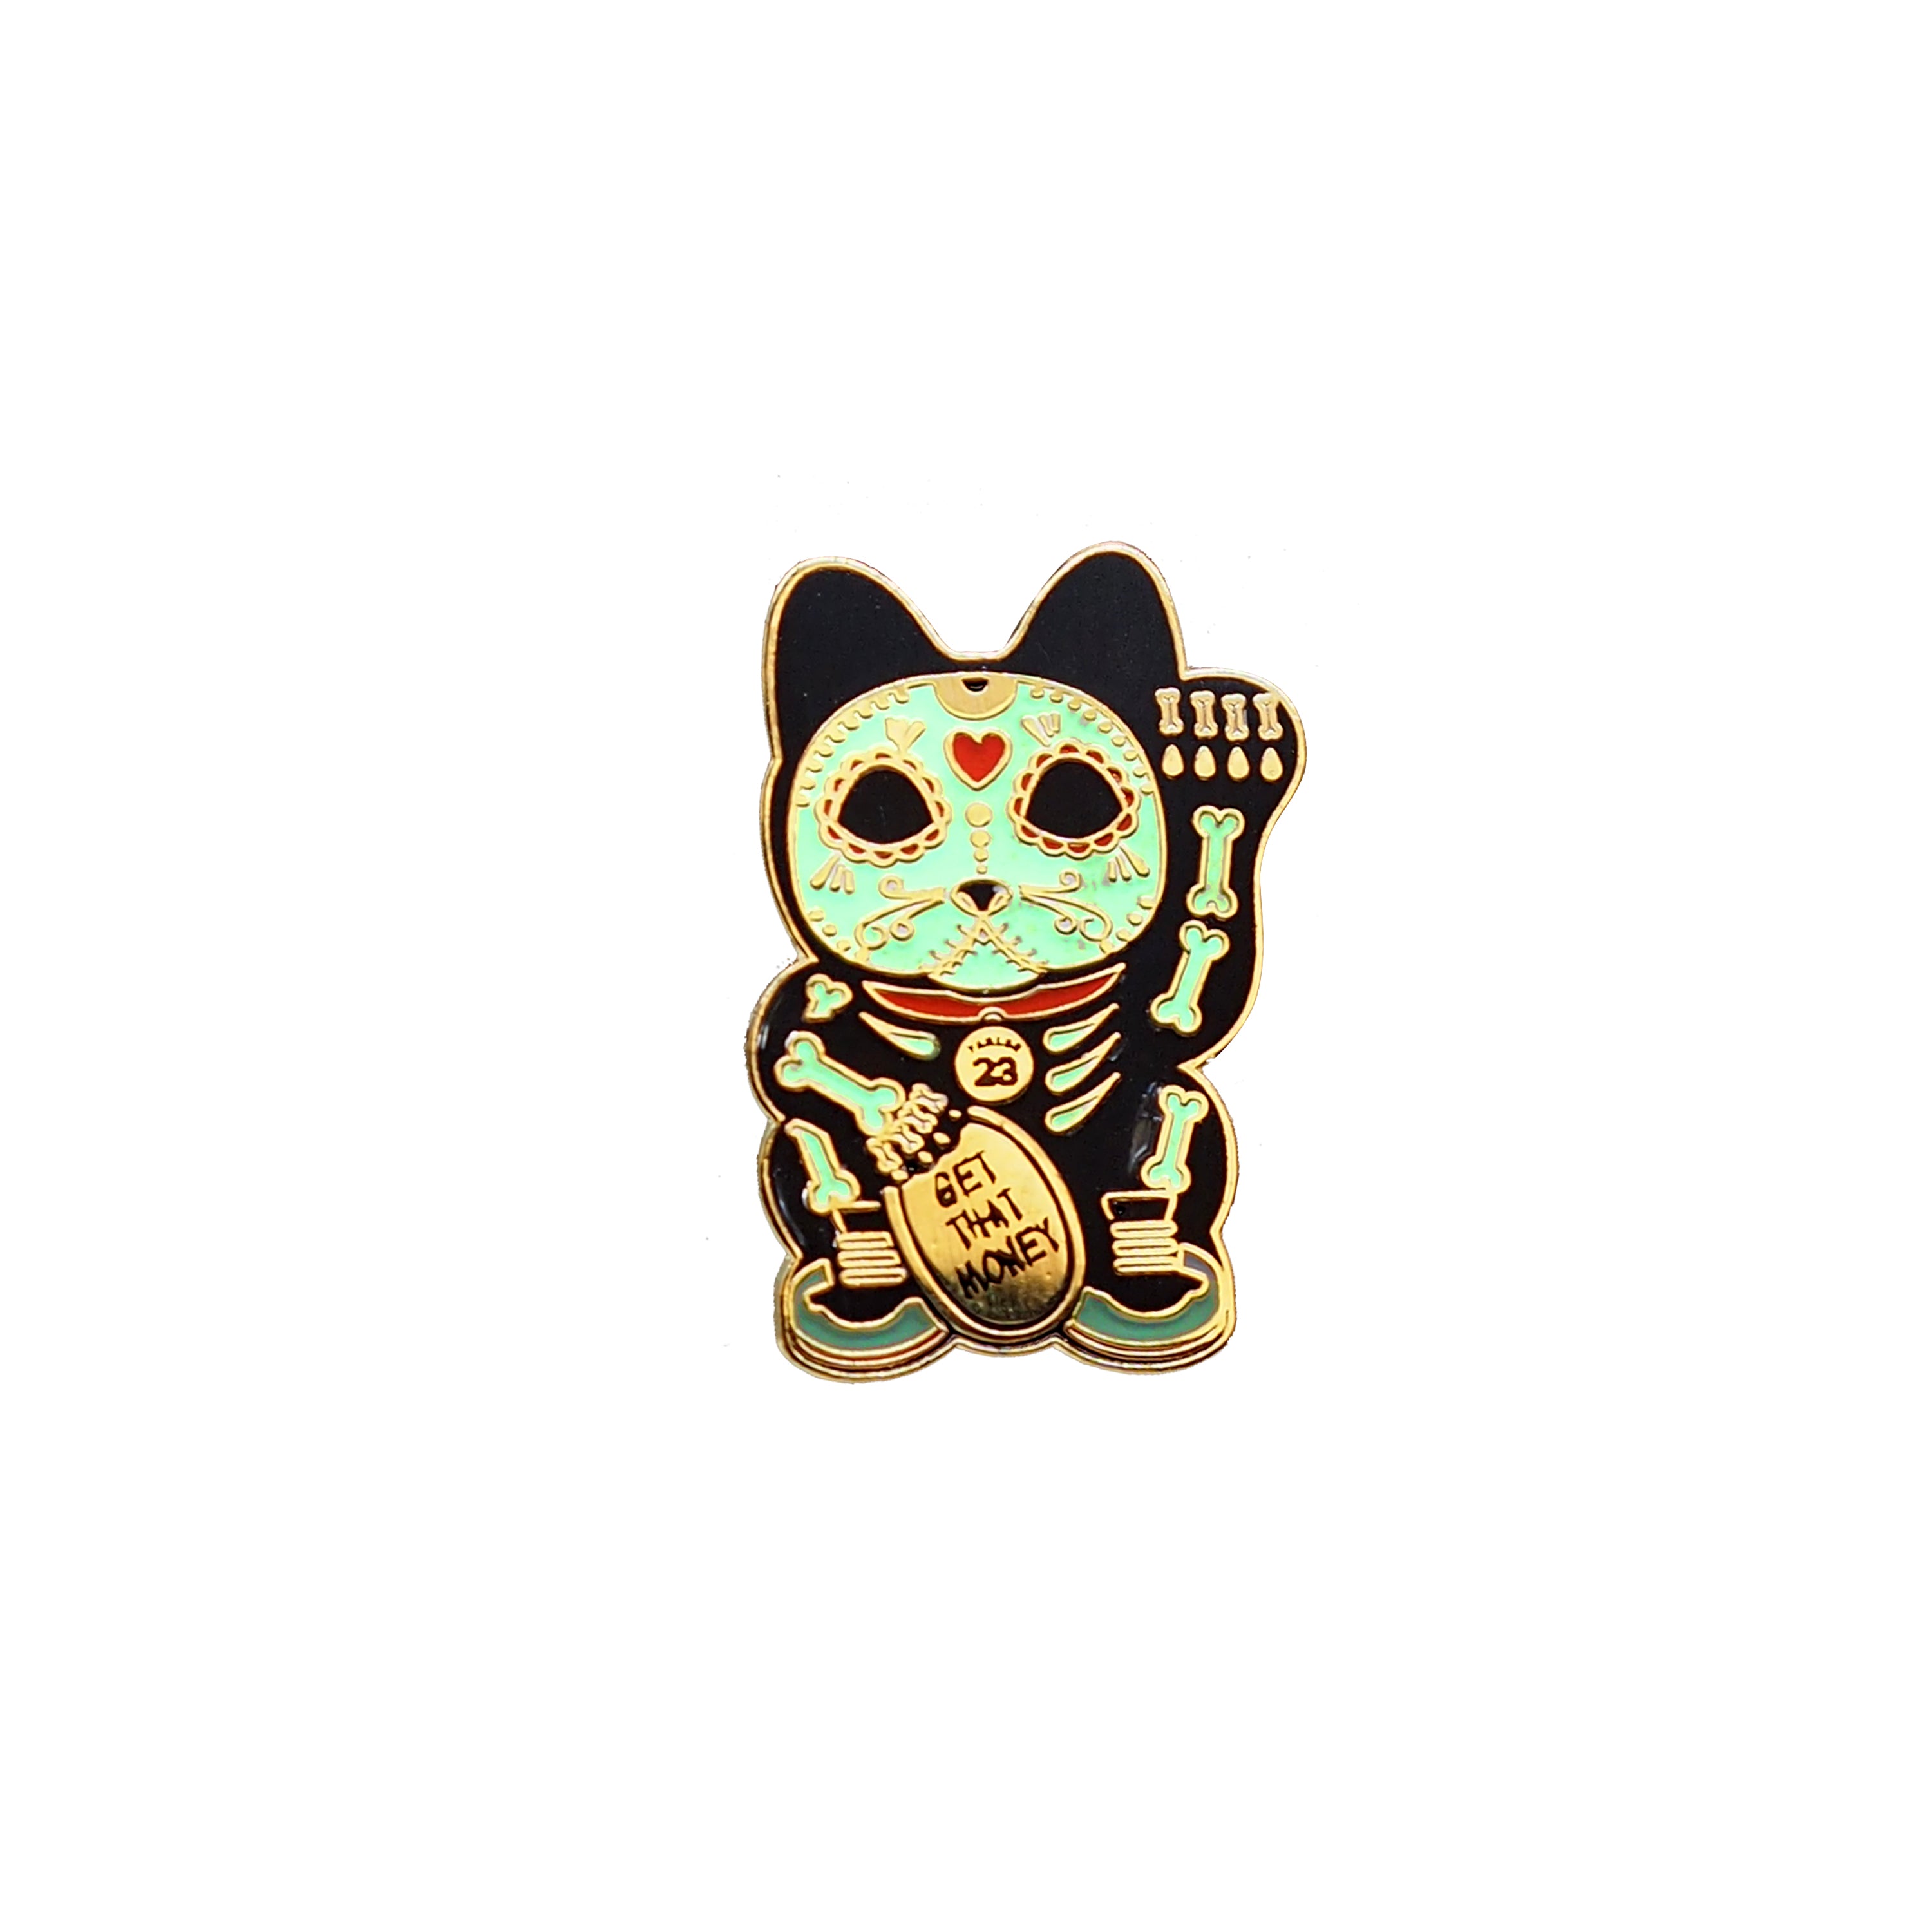 Parlor 23 "Skeleton Cat" Pin (Glow-in-the-Dark)